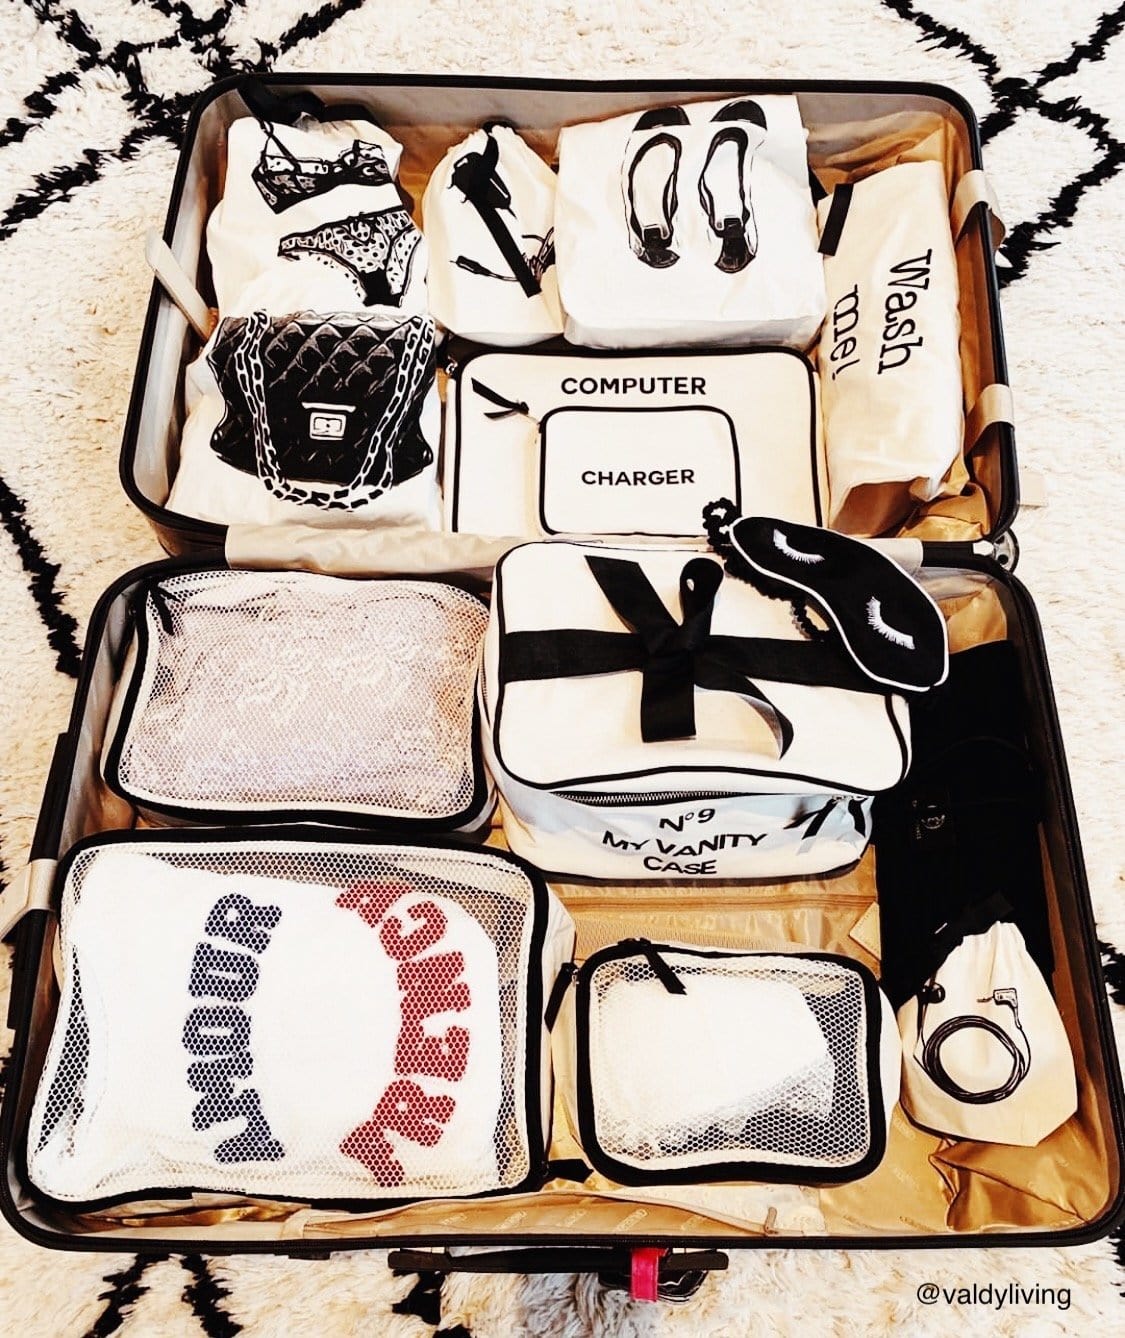 Bag-all My Vanity Travel Case